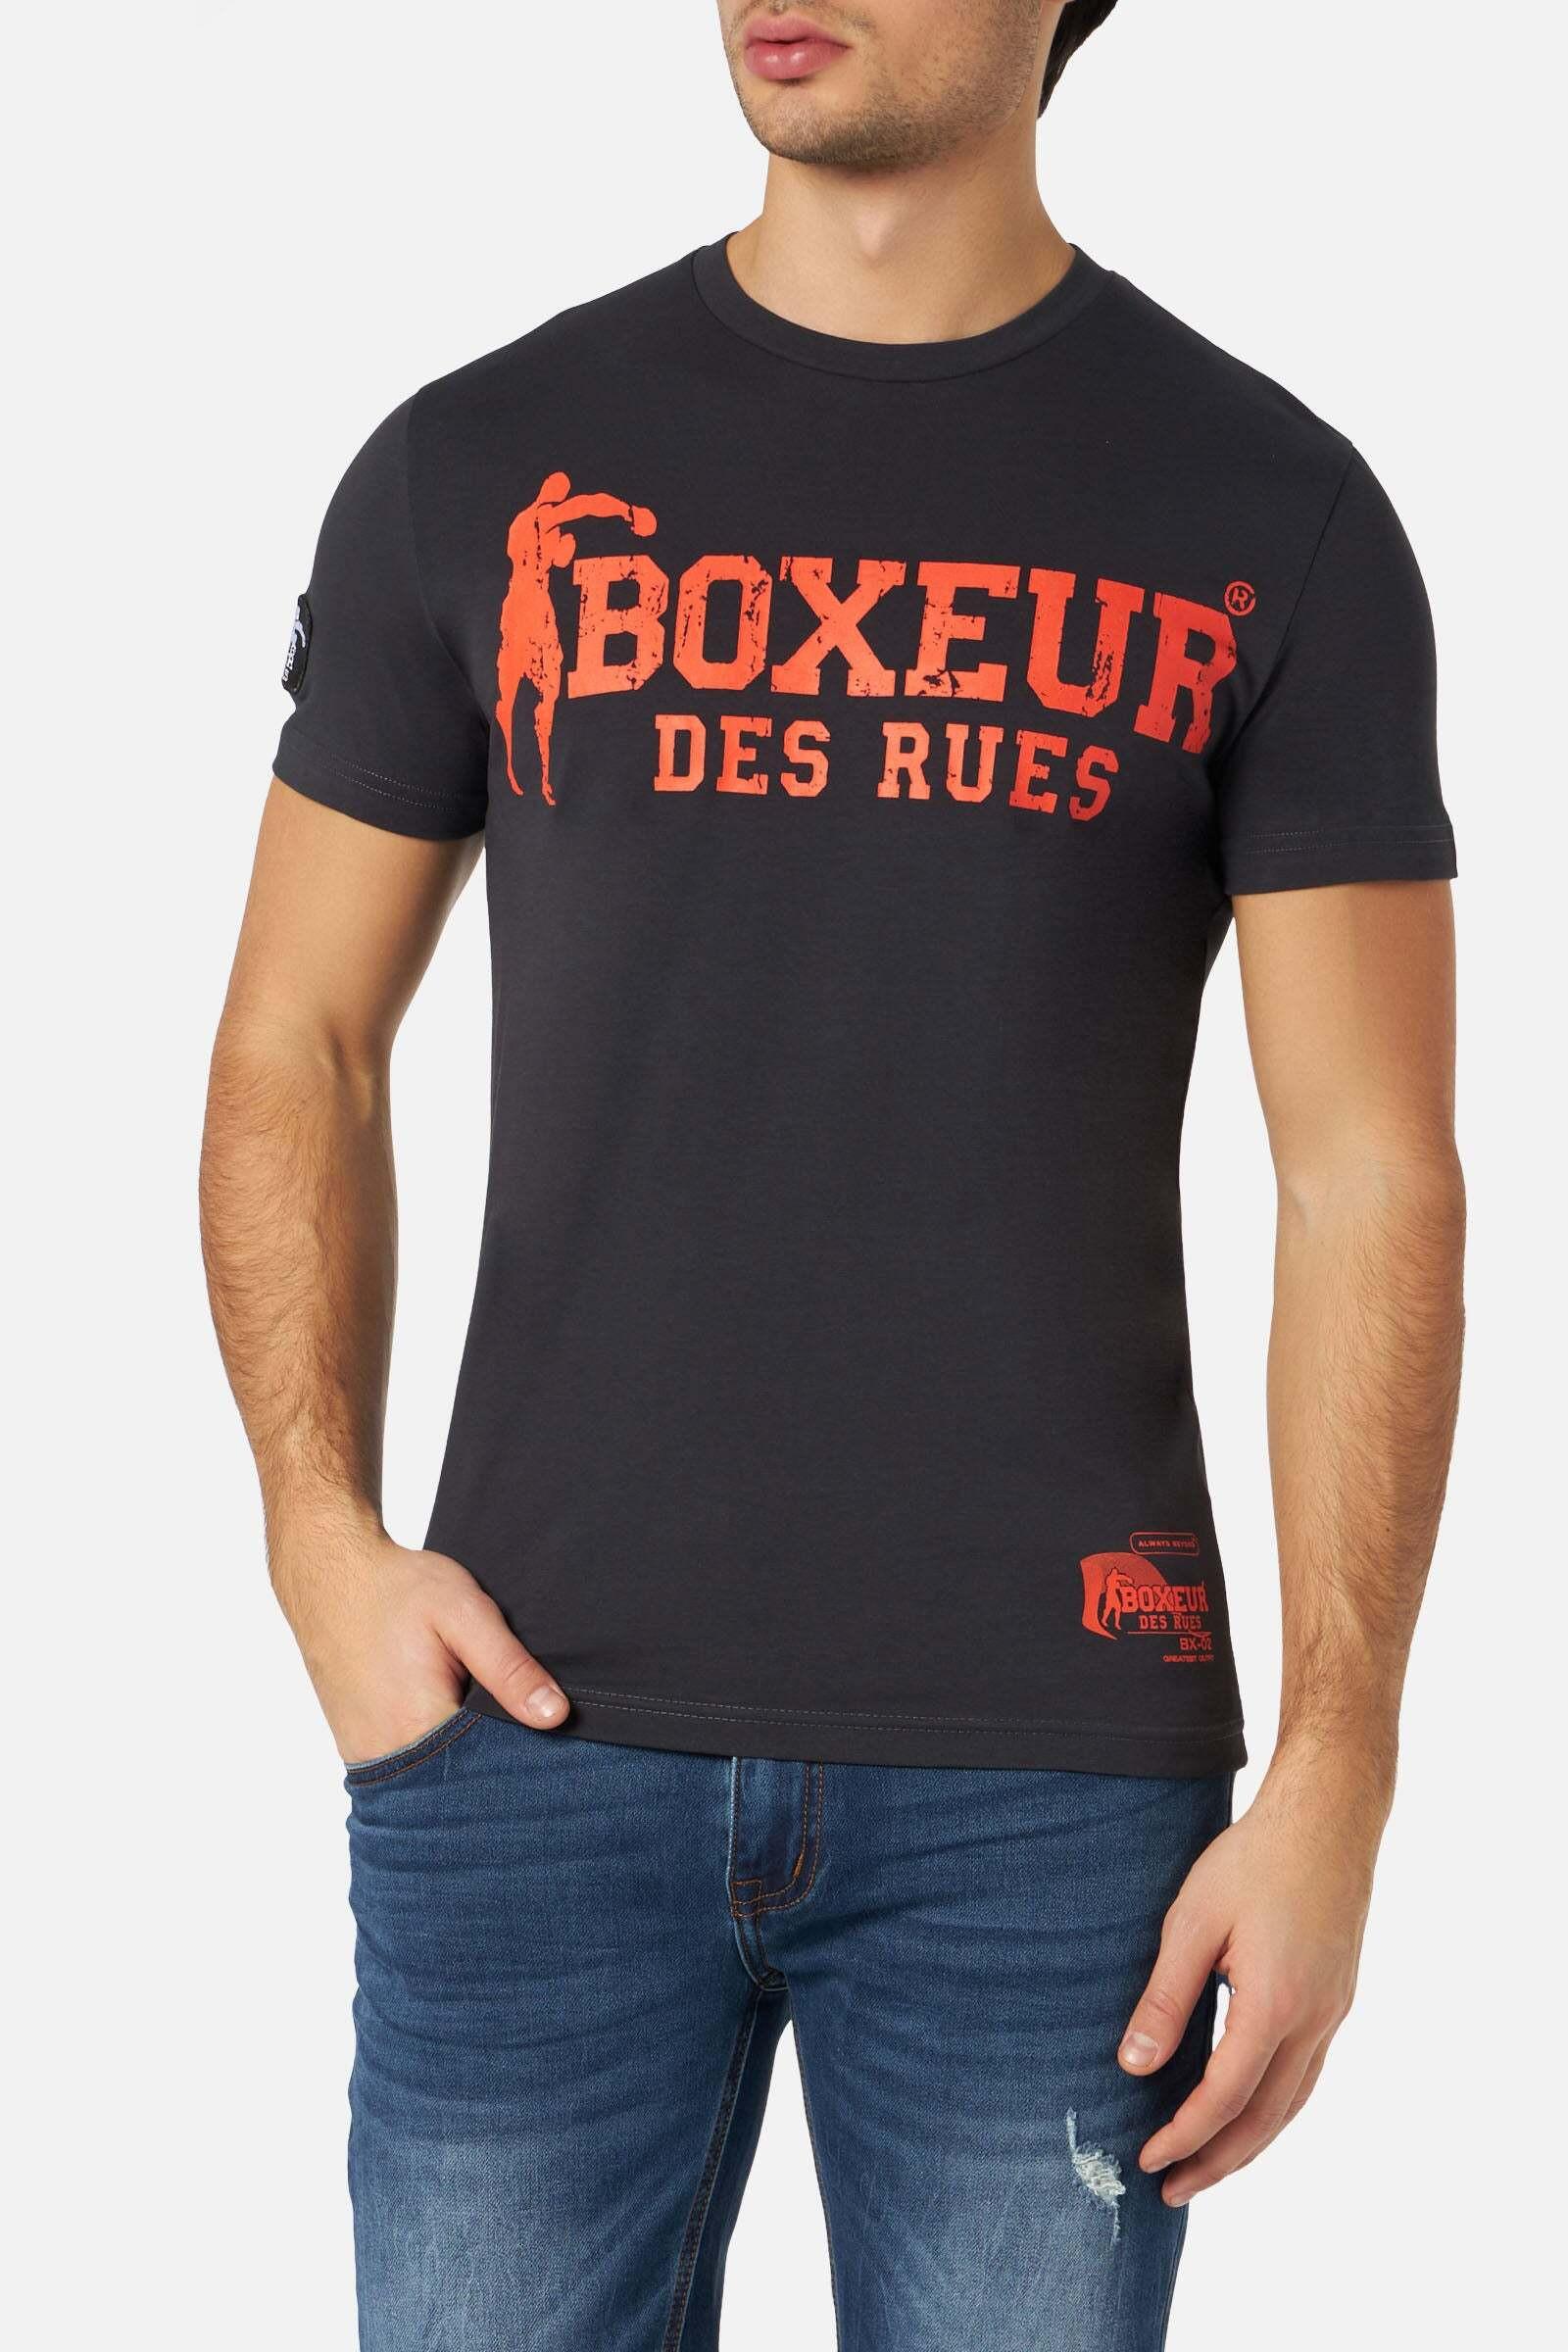 T-shirts T-shirt Boxeur Street 2 Herren Taubengrau S von BOXEUR DES RUES